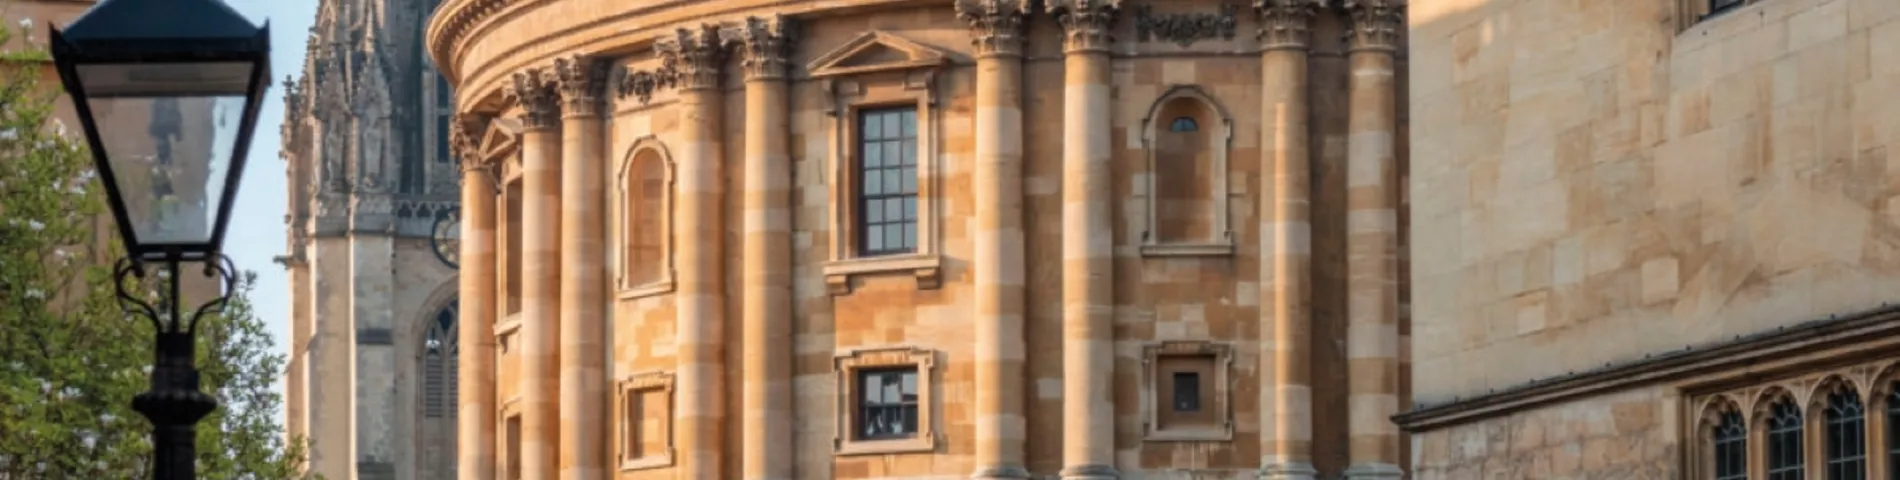 Oxford Royale Academy obrazek 1